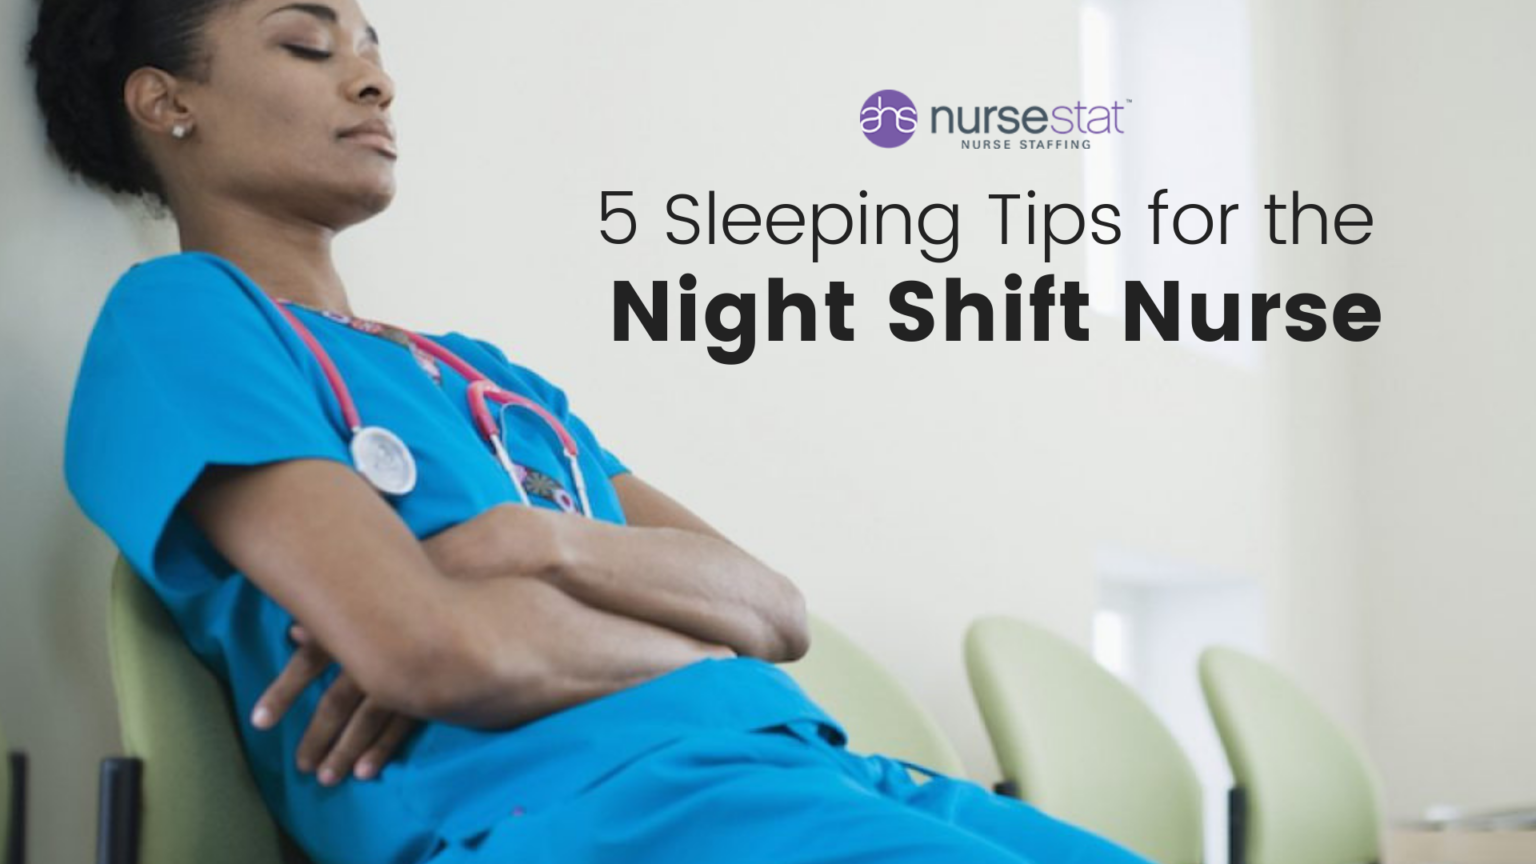 night shift nurses carnal corruption